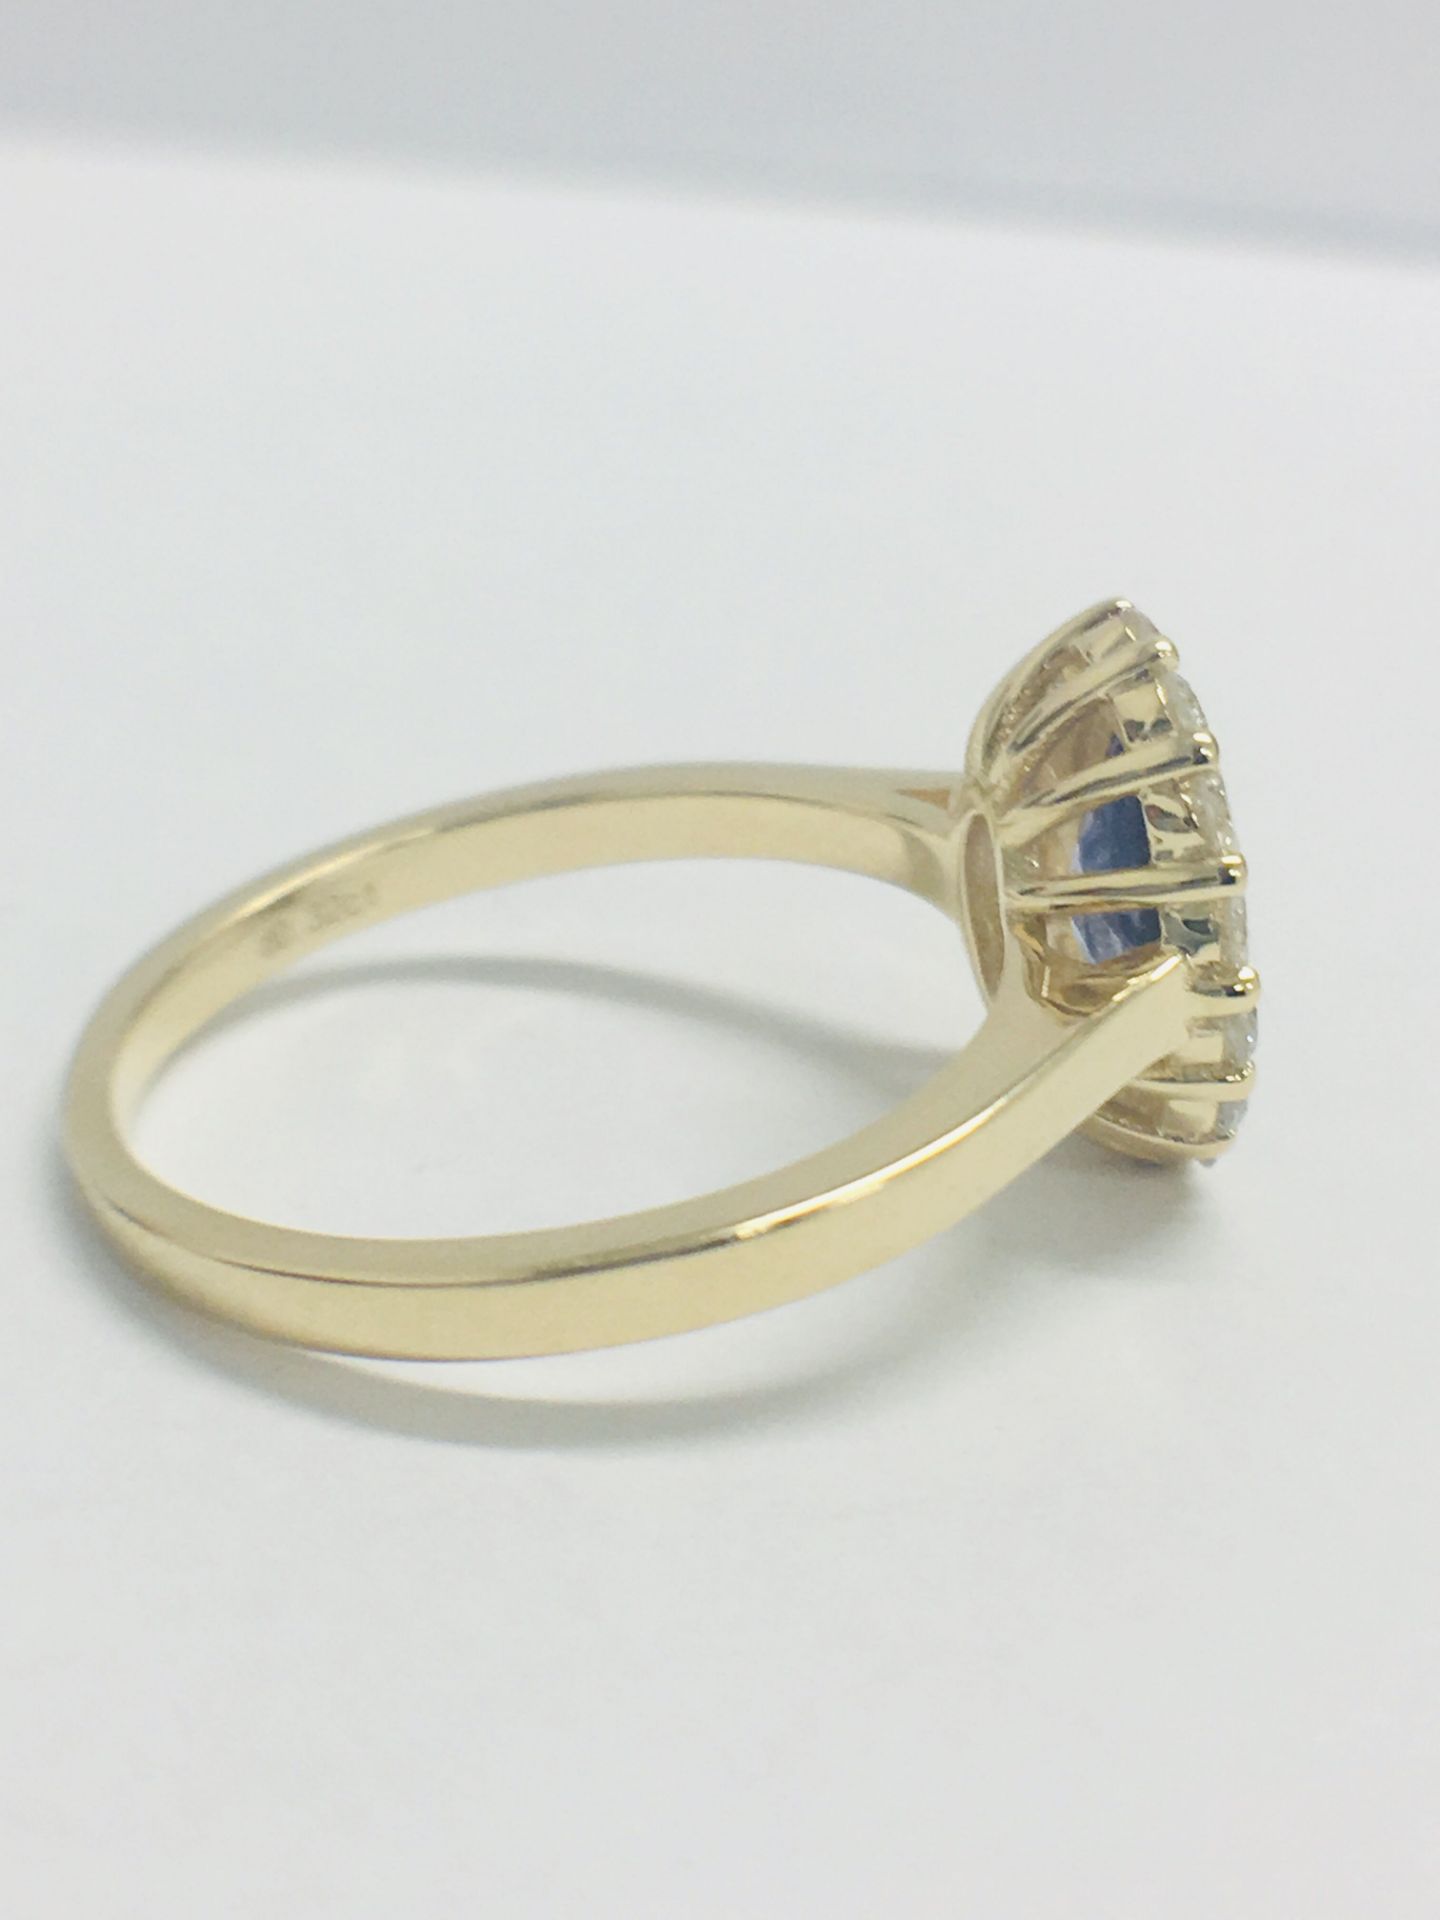 14ct Yellow Gold Sapphire & Diamond Ring - Image 9 of 9